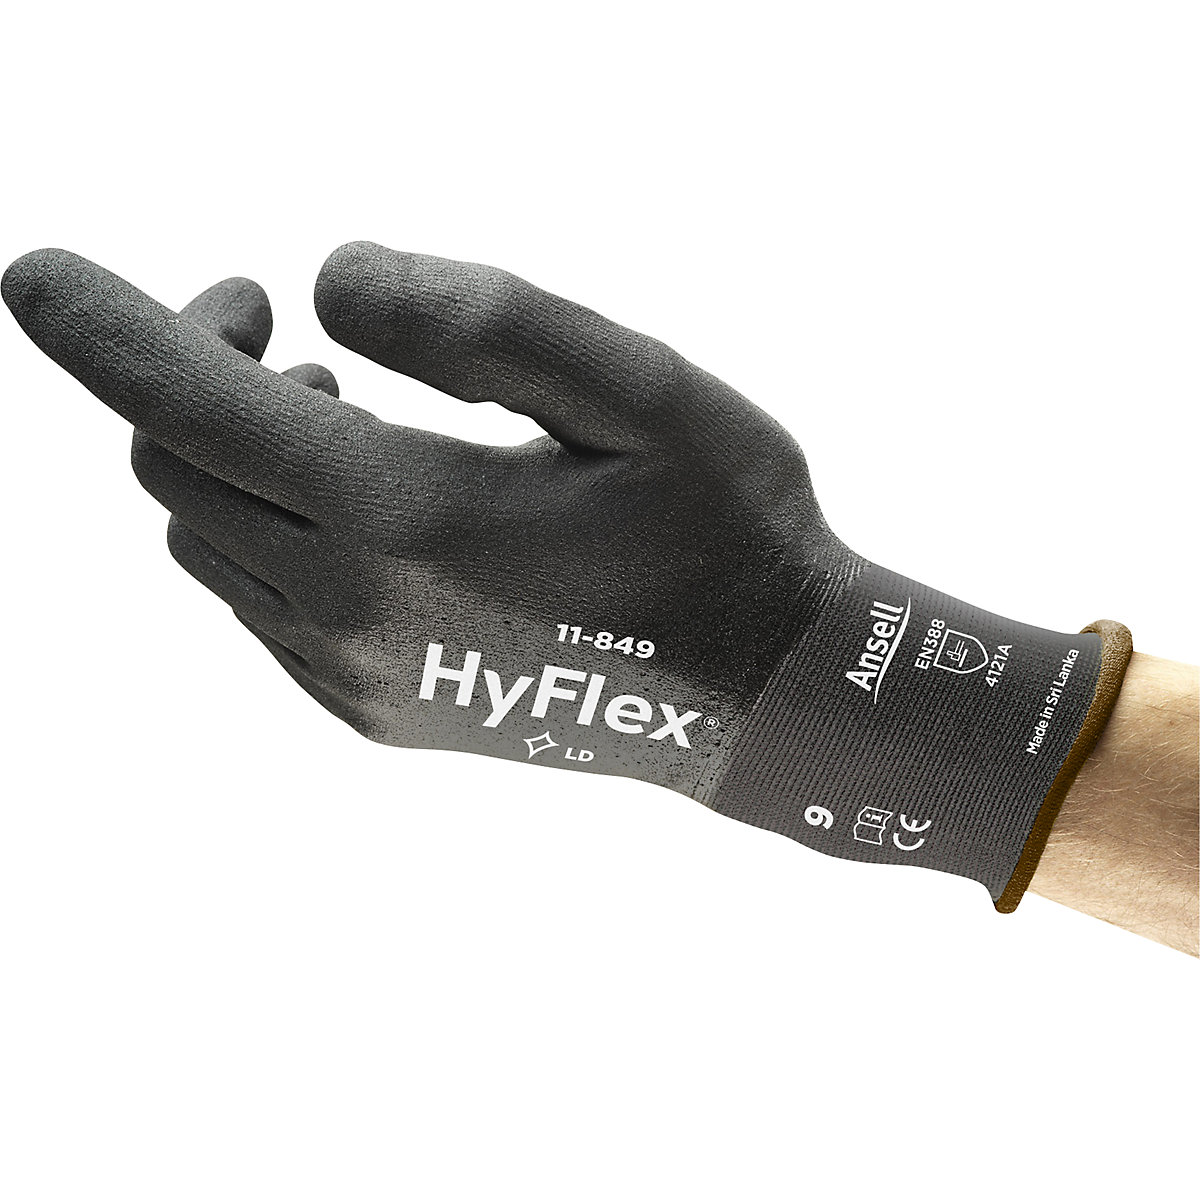 Delovne rokavice HyFlex® 11-849 – Ansell (Slika izdelka 5)-4